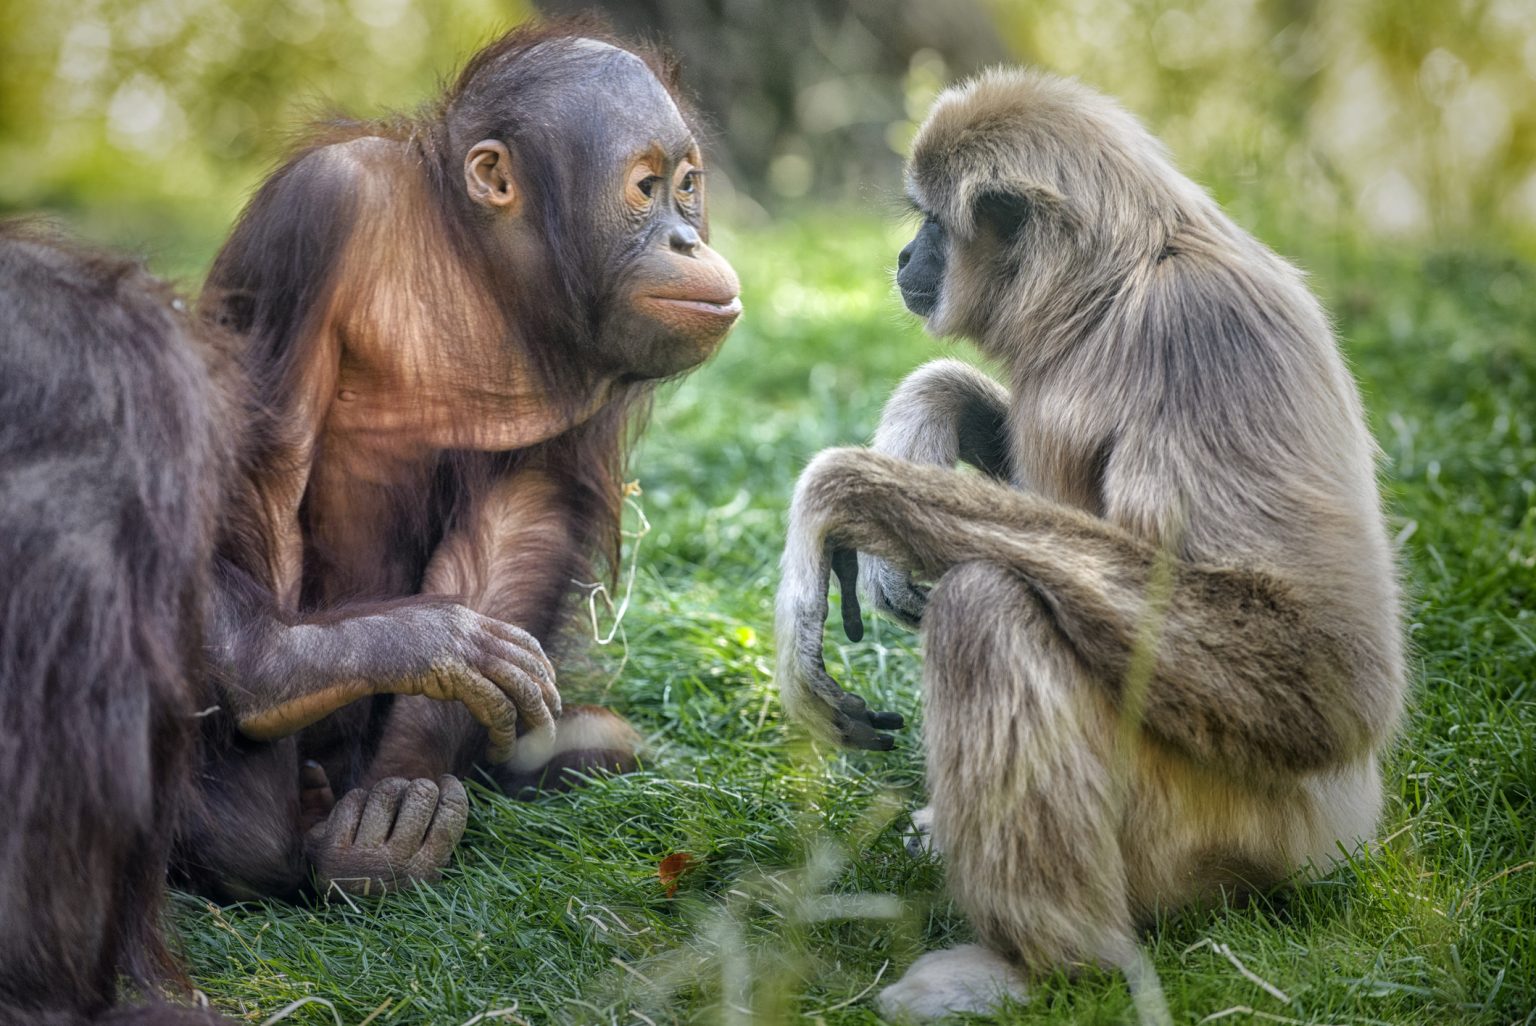 La comunicación animal animales revela secretos sobre lenguaje humano